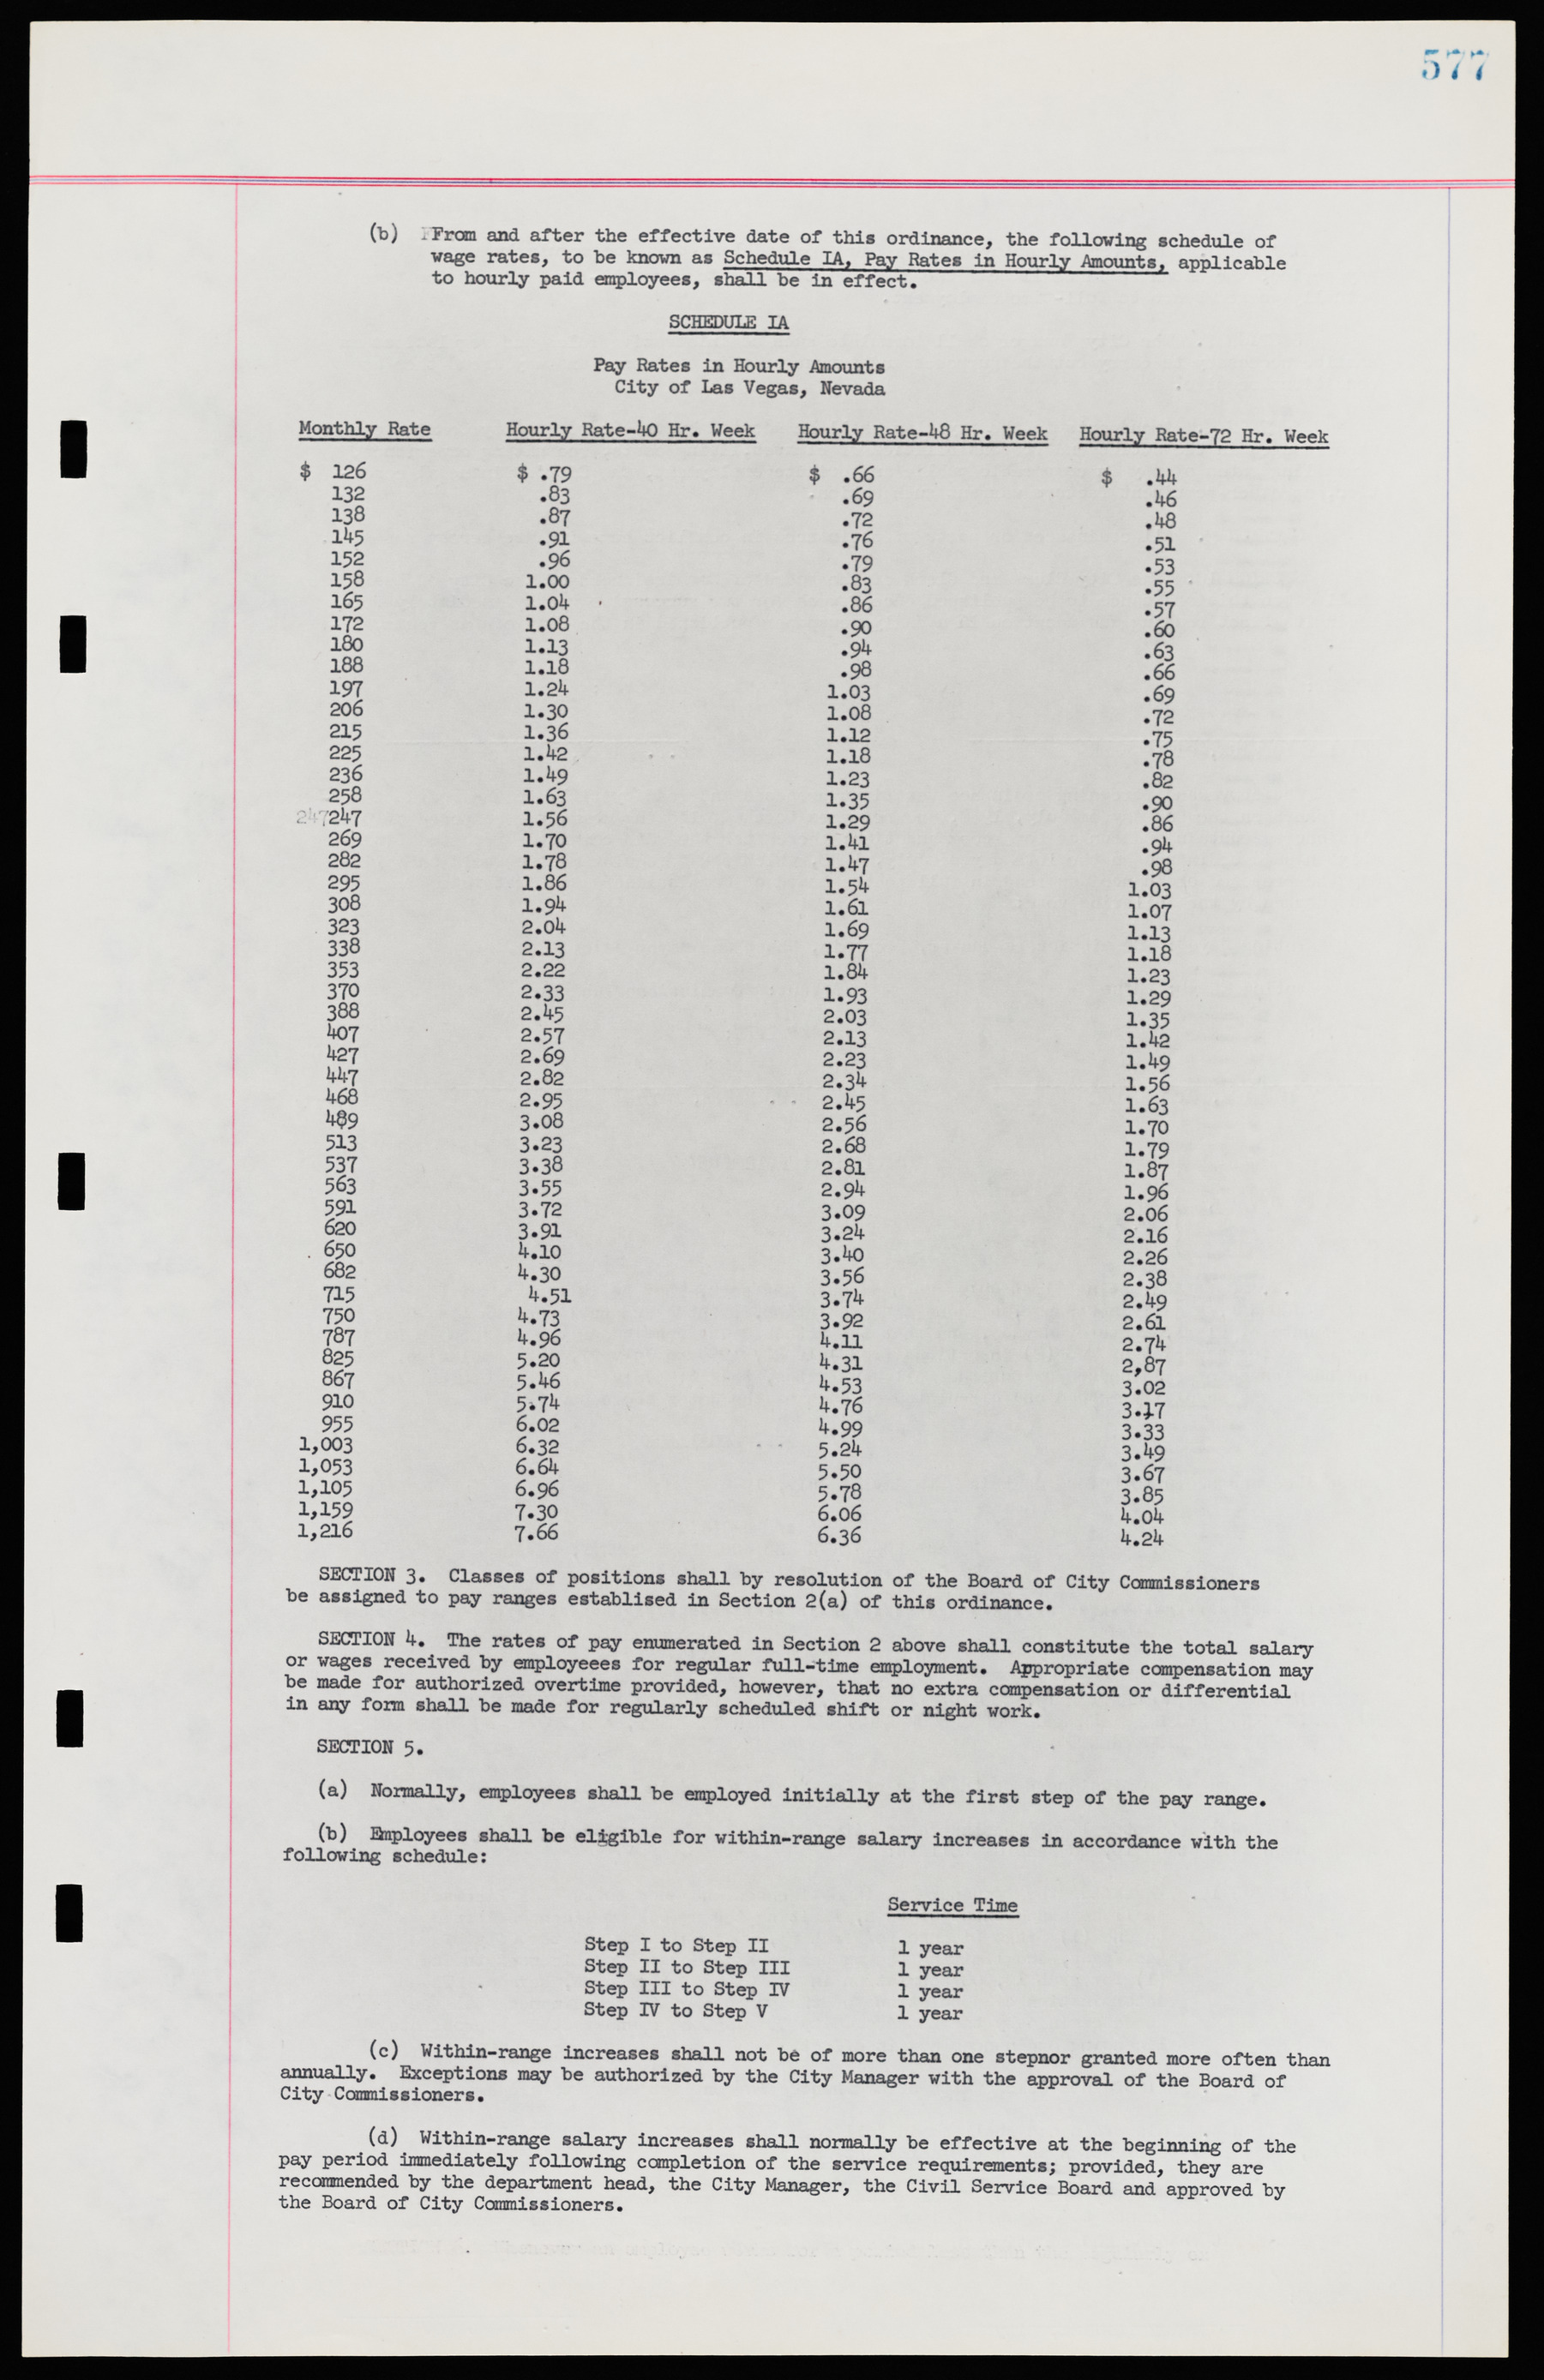 Las Vegas City Ordinances, November 13, 1950 to August 6, 1958, lvc000015-585